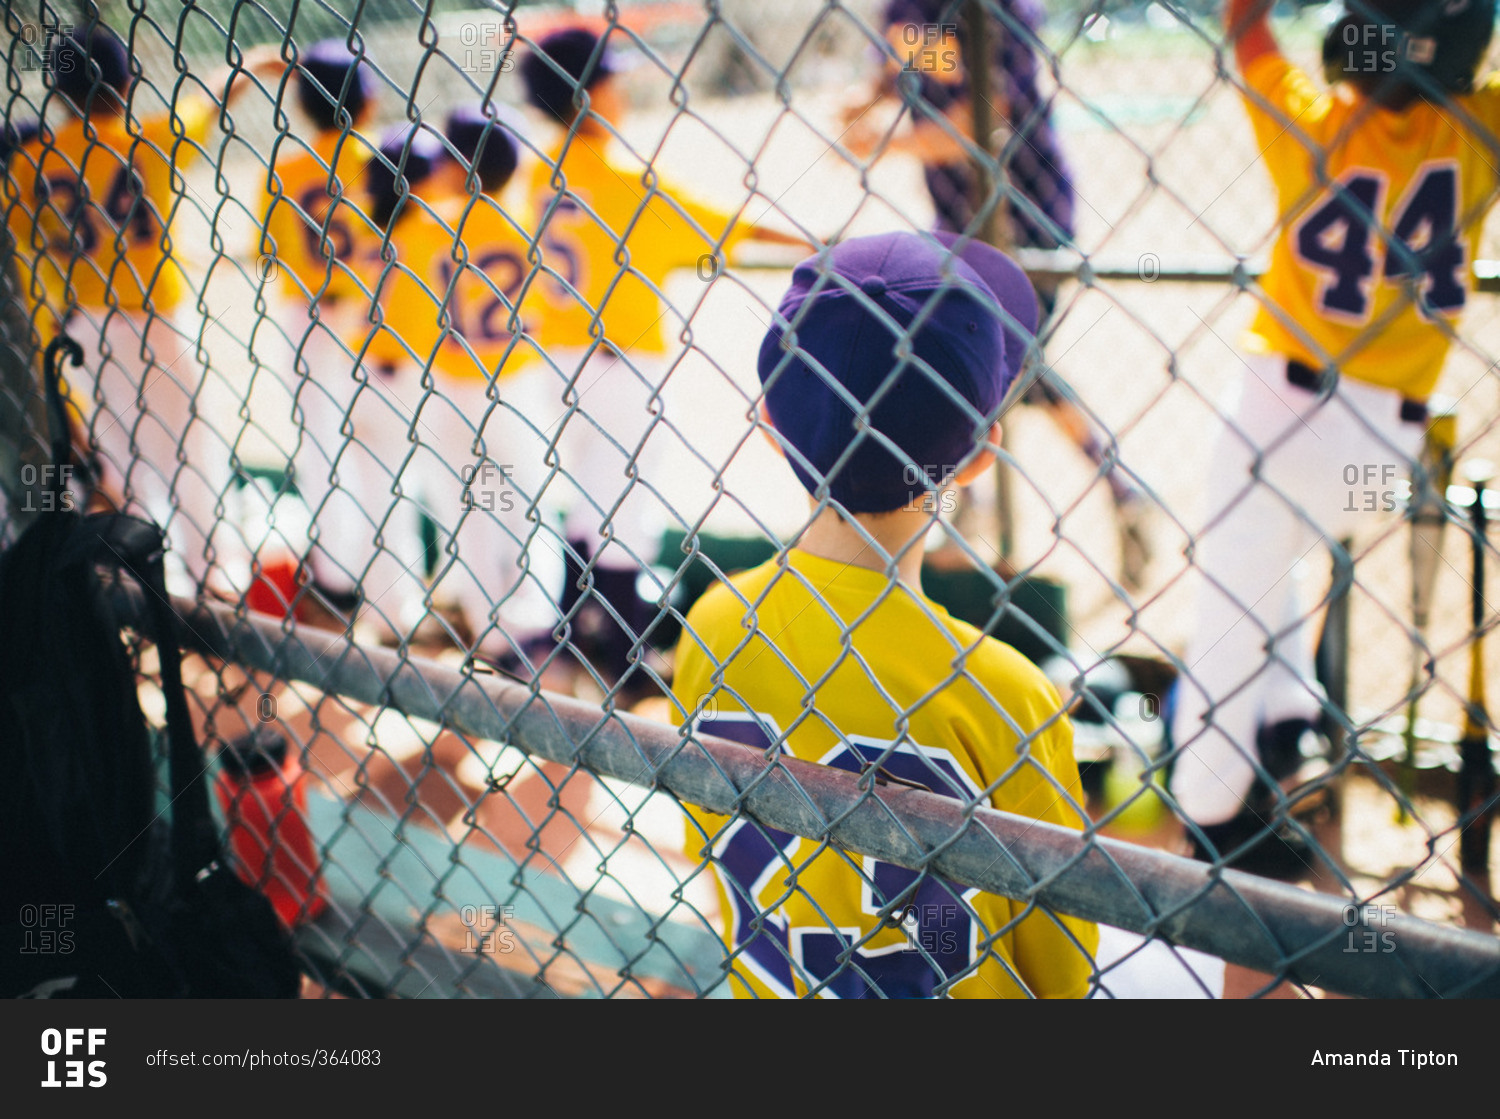 Boys on a baseball team in a dugout